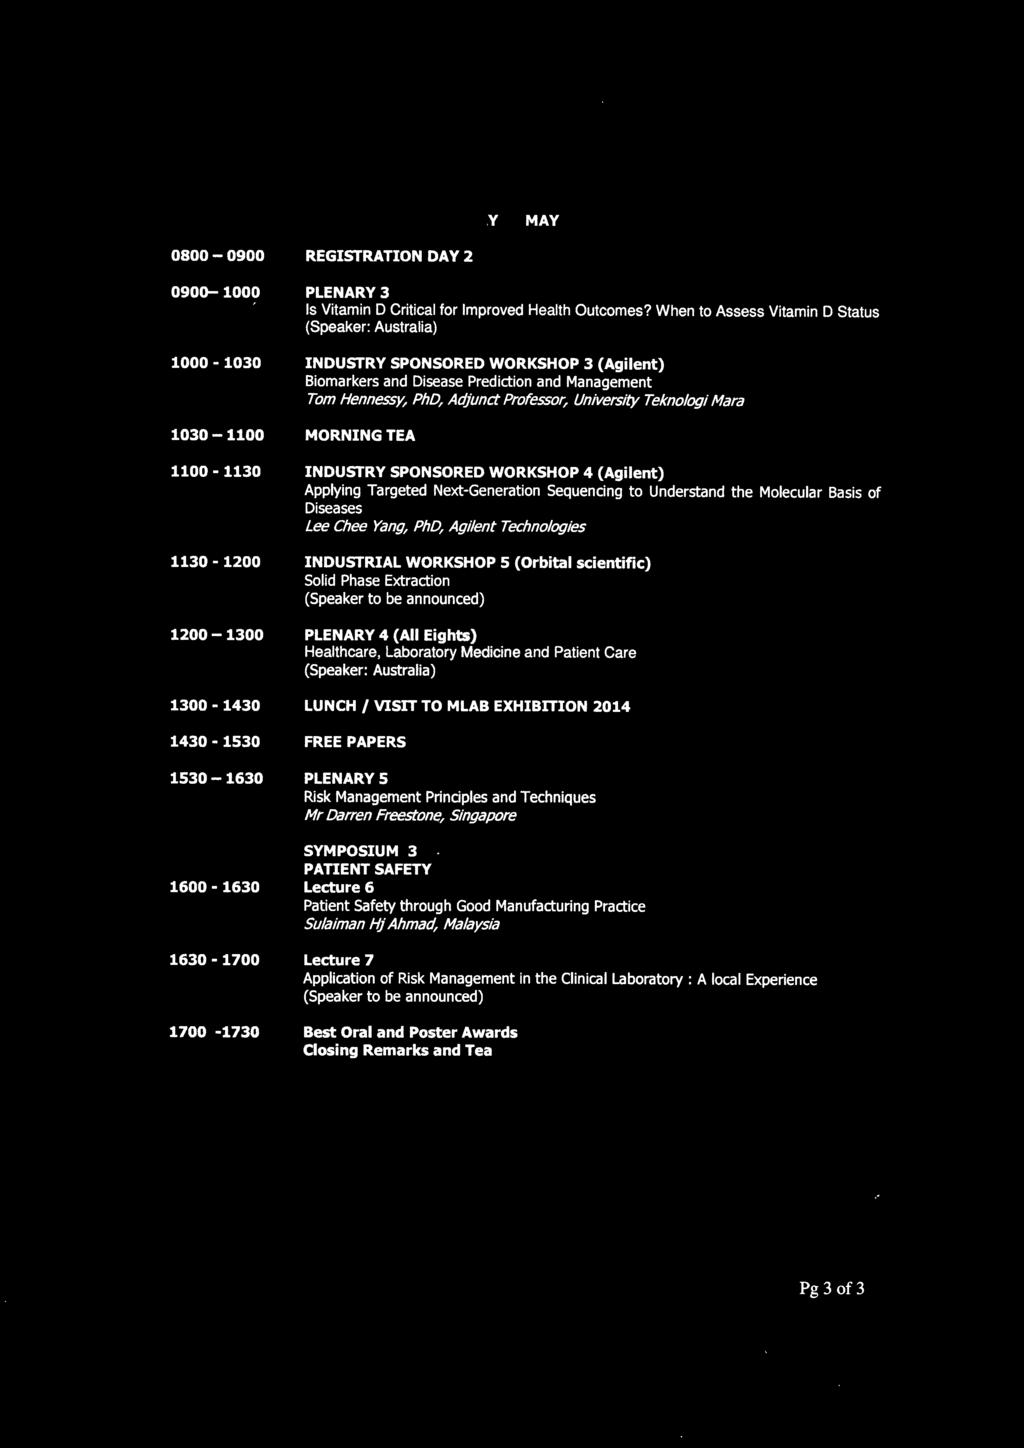 (Speaker: Australia) 1300-1430 LUNCH/ VISIT TO MLAB EXHIBITION 2014 1430-1530 FREE PAPERS 1530-1630 PLENARY 5 Risk Management Prindples and Techniques Mr Darren Freestone, Singapore 1600-1630